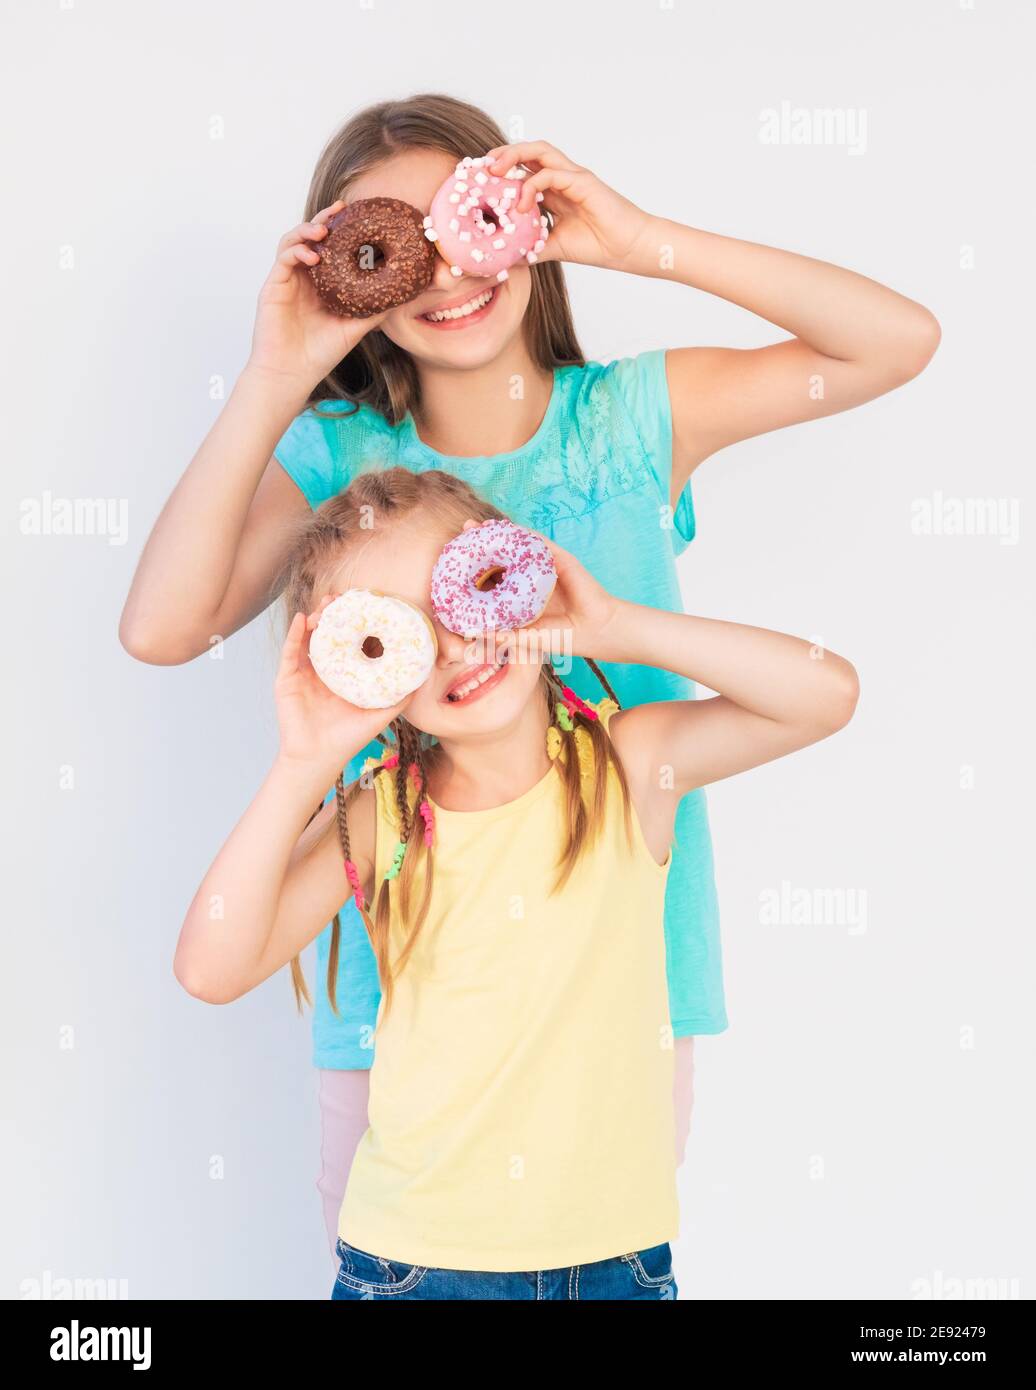 Two girls making funny jokes and joyful expressions using freshly baked  donuts Stock Photo - Alamy